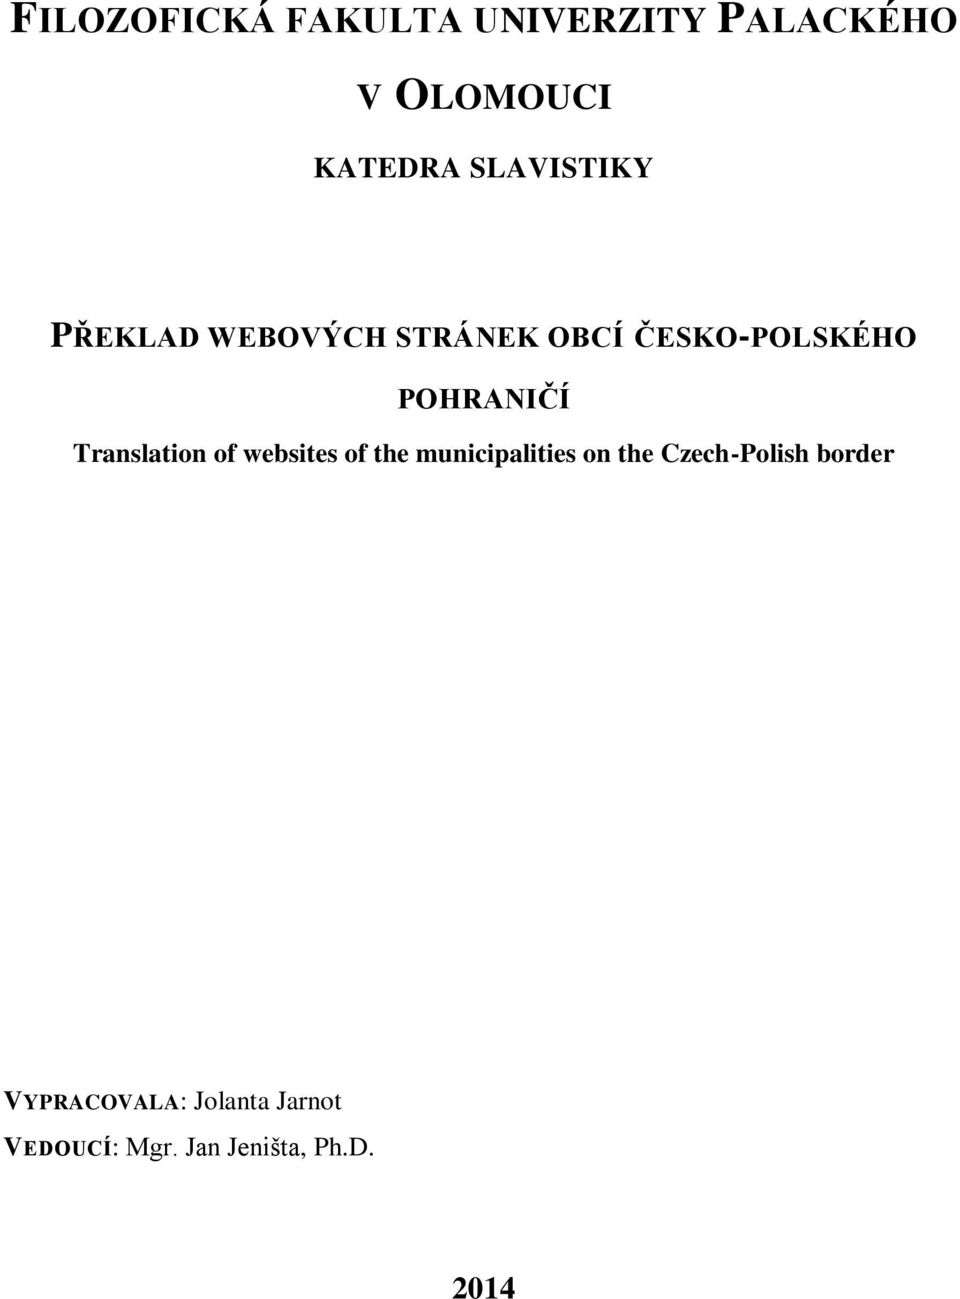 Translation of websites of the municipalities on the Czech-Polish